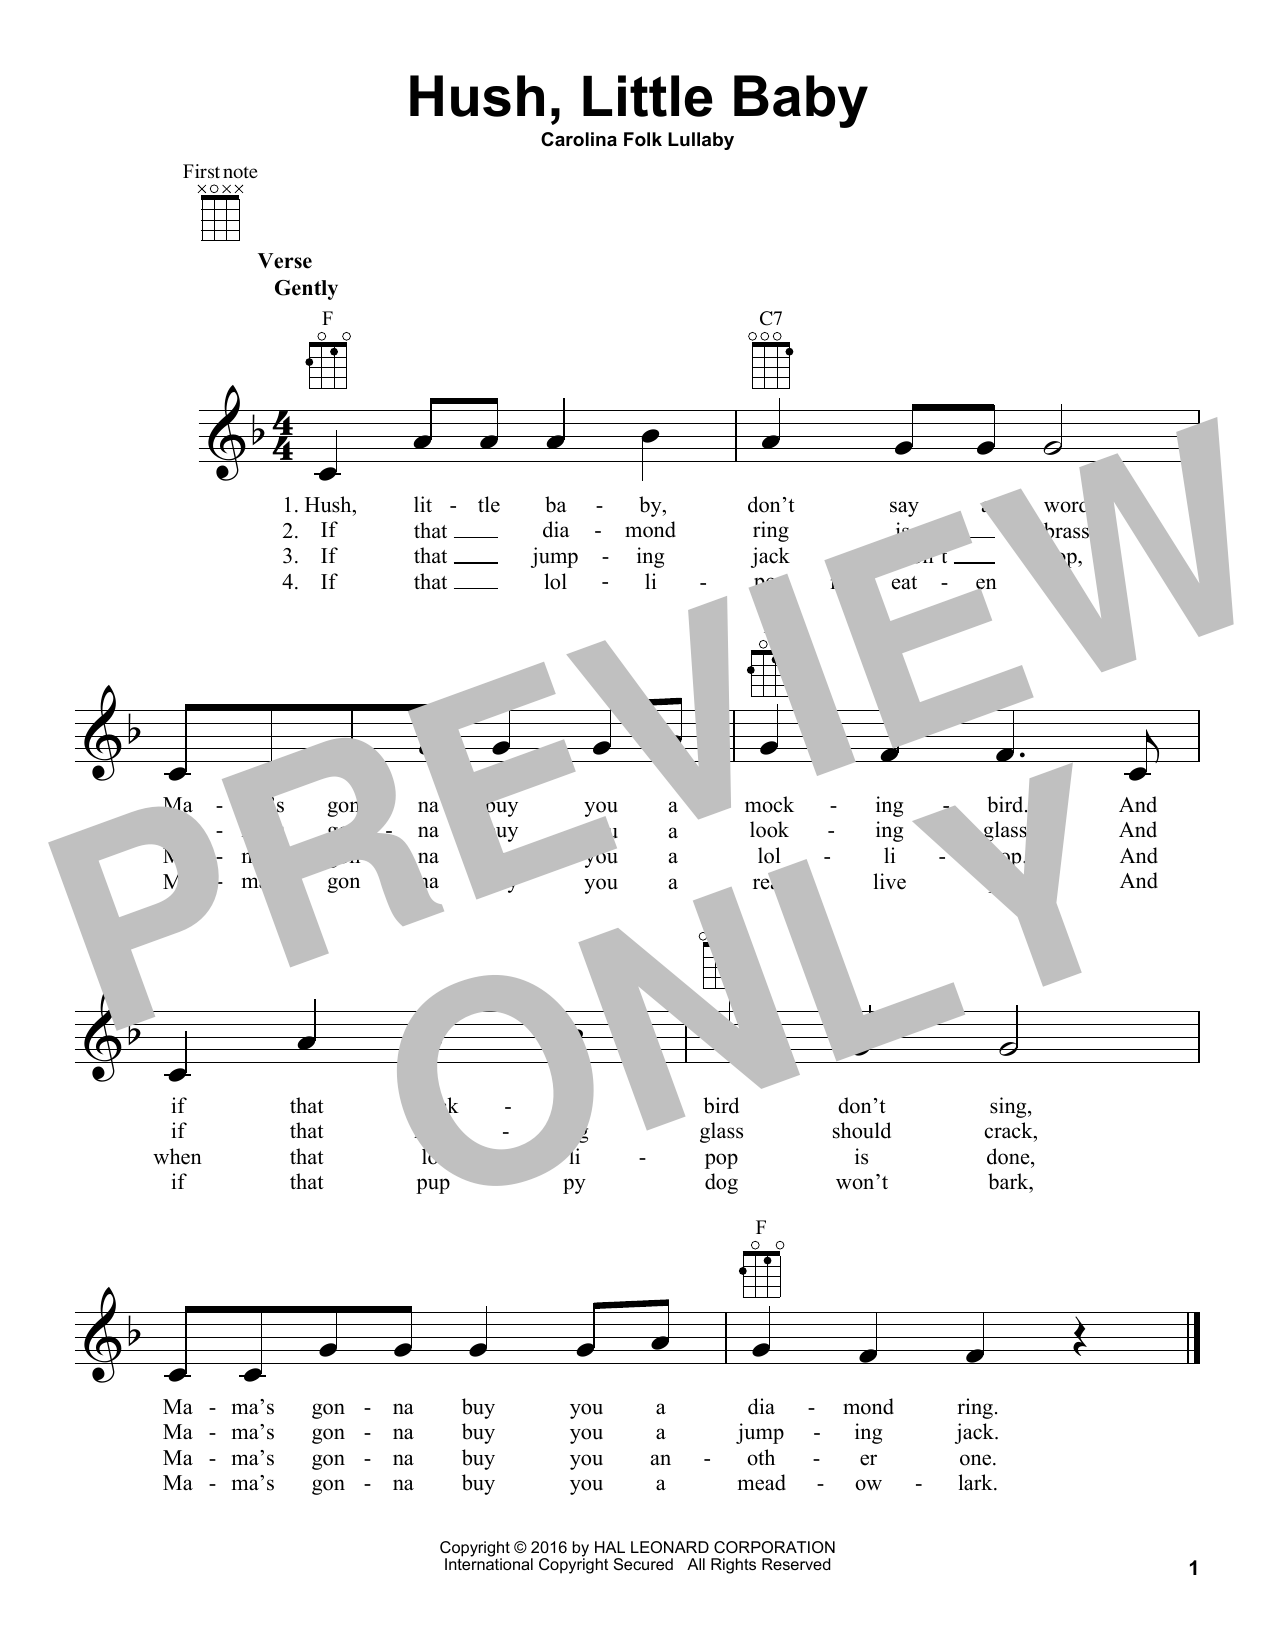 Carolina Folk Lullaby Hush, Little Baby Sheet Music Notes & Chords for Ocarina - Download or Print PDF